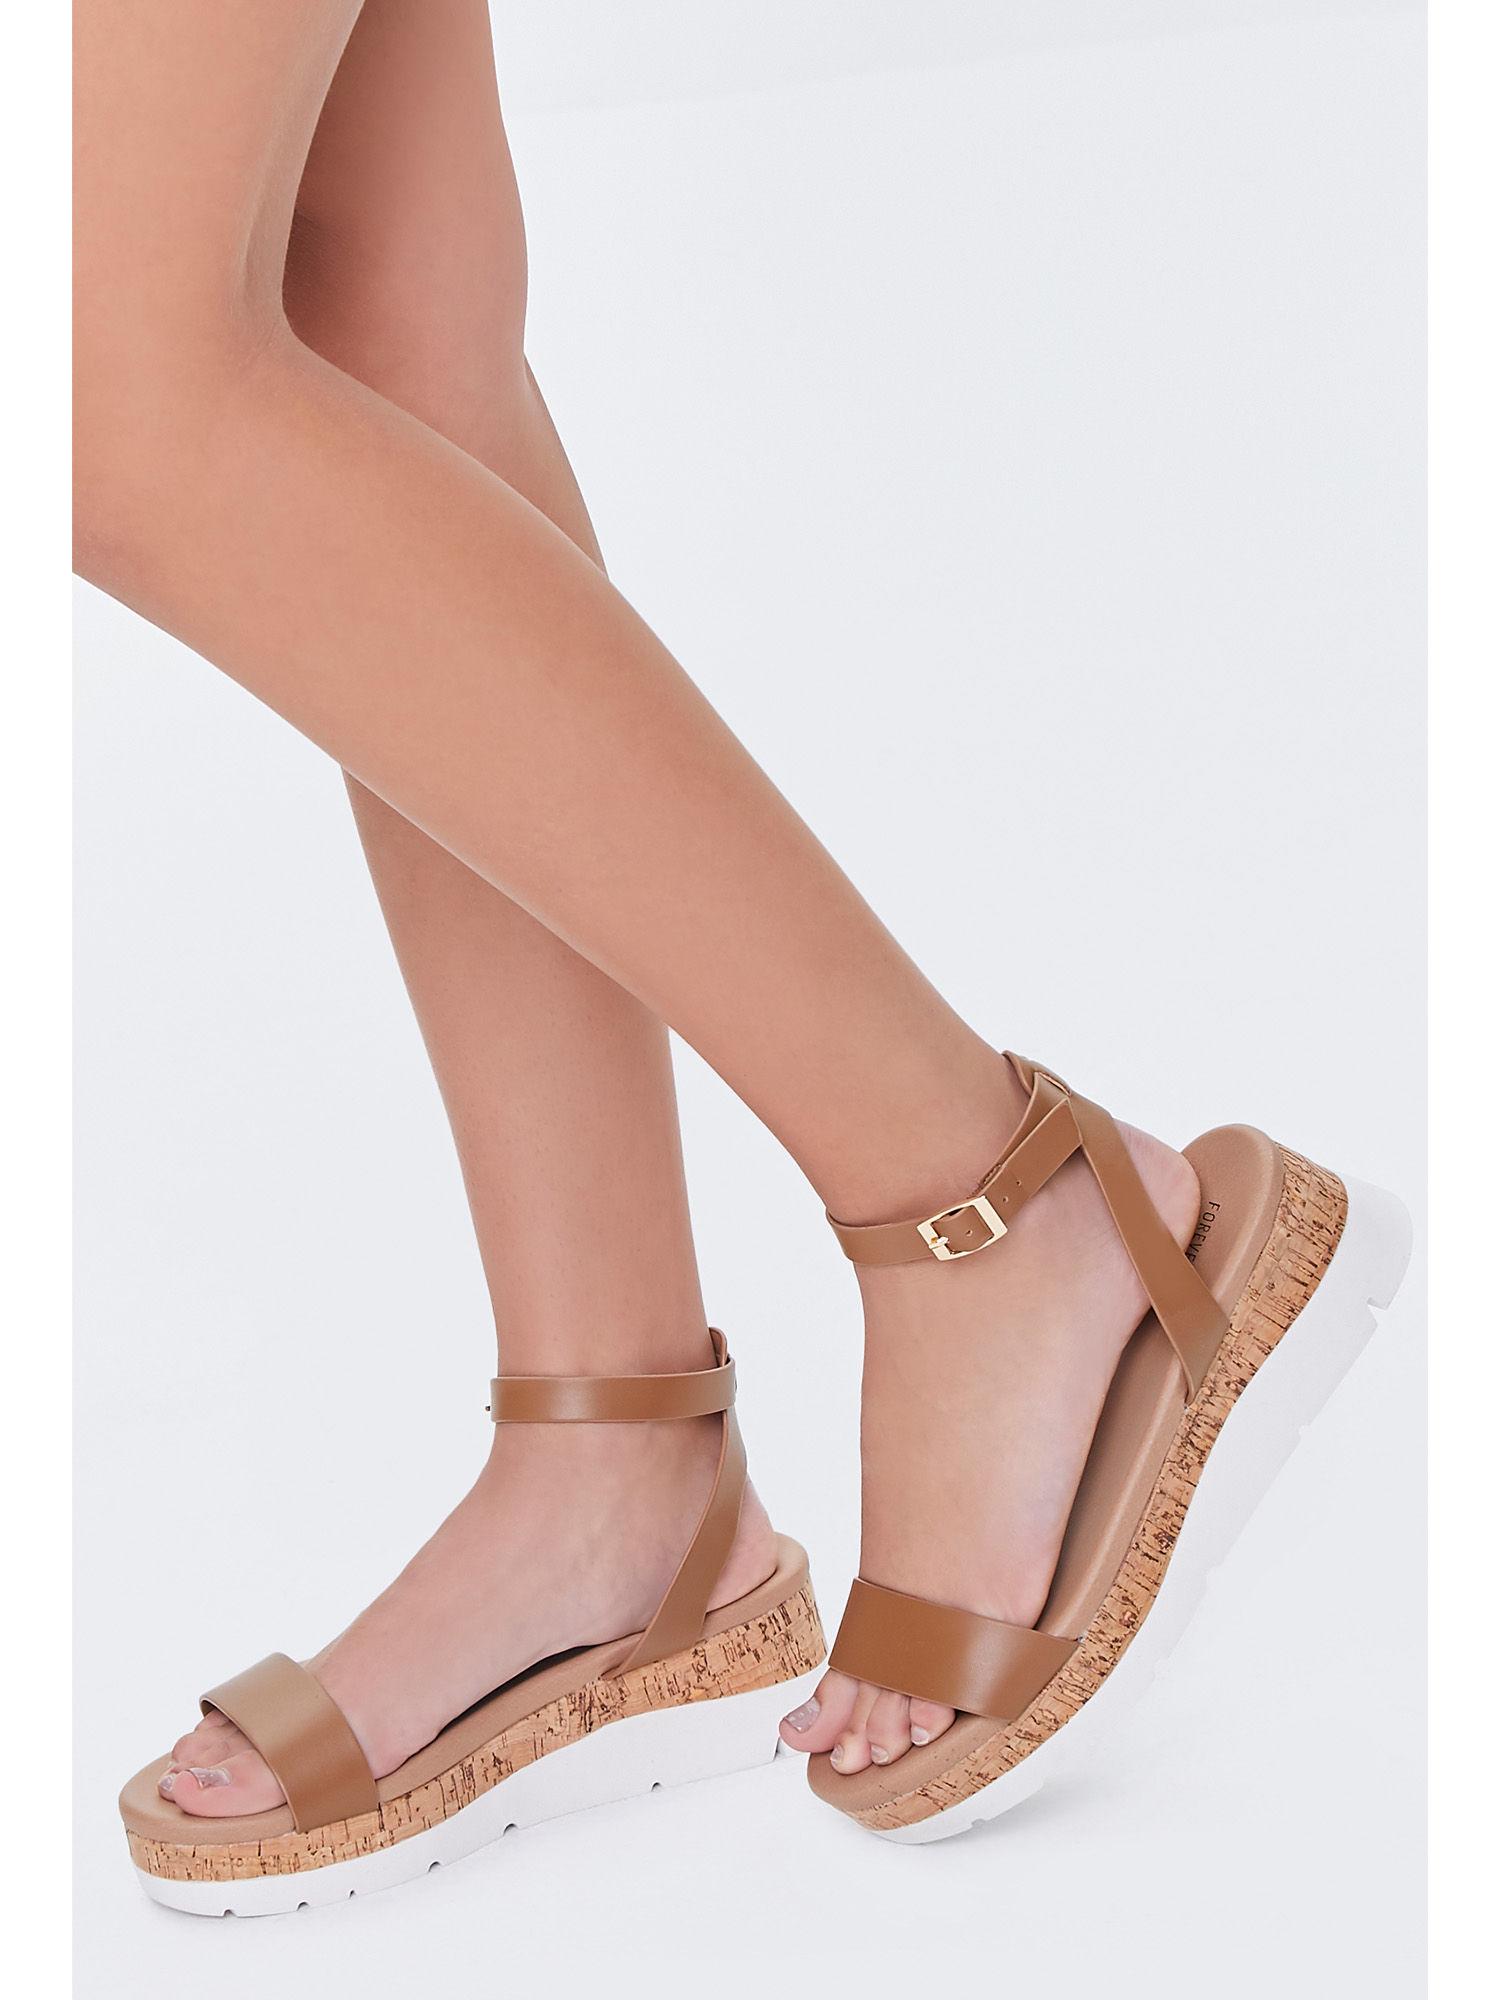 brown-sandal